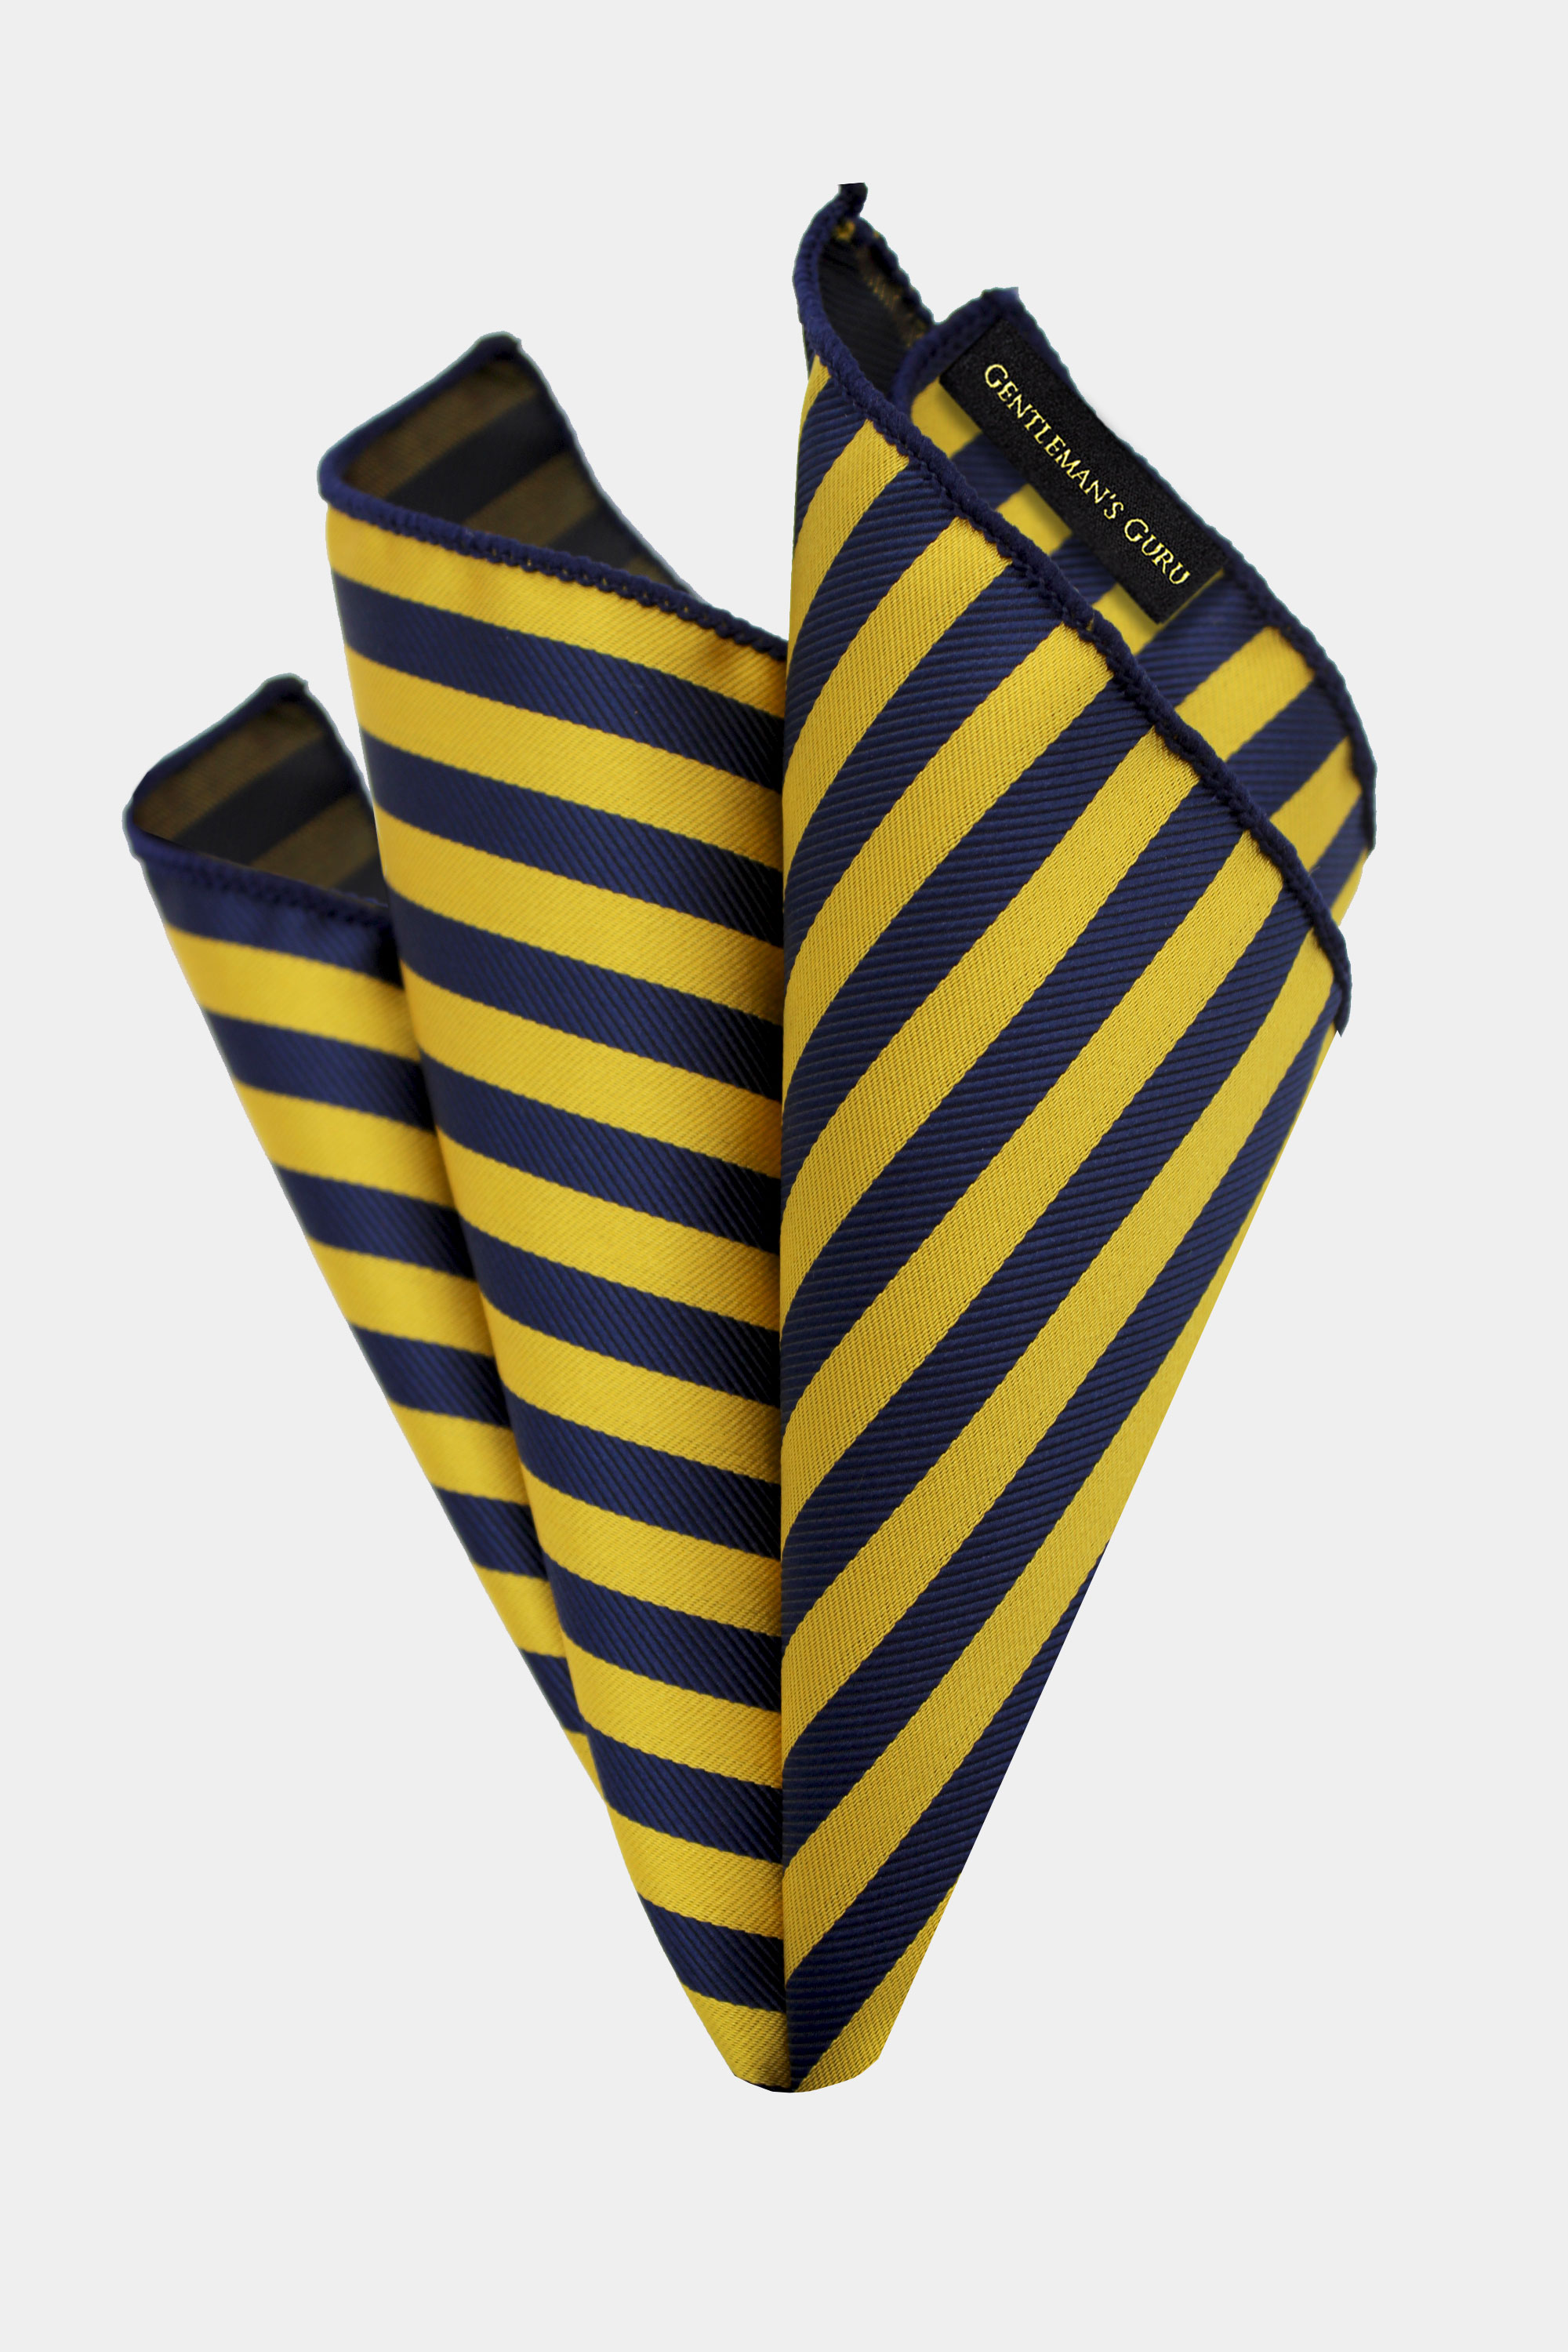 Navy-Blue-and-Gold-Striped-Pocket-Square-Handkerchief-from-Gentlemansguru.com